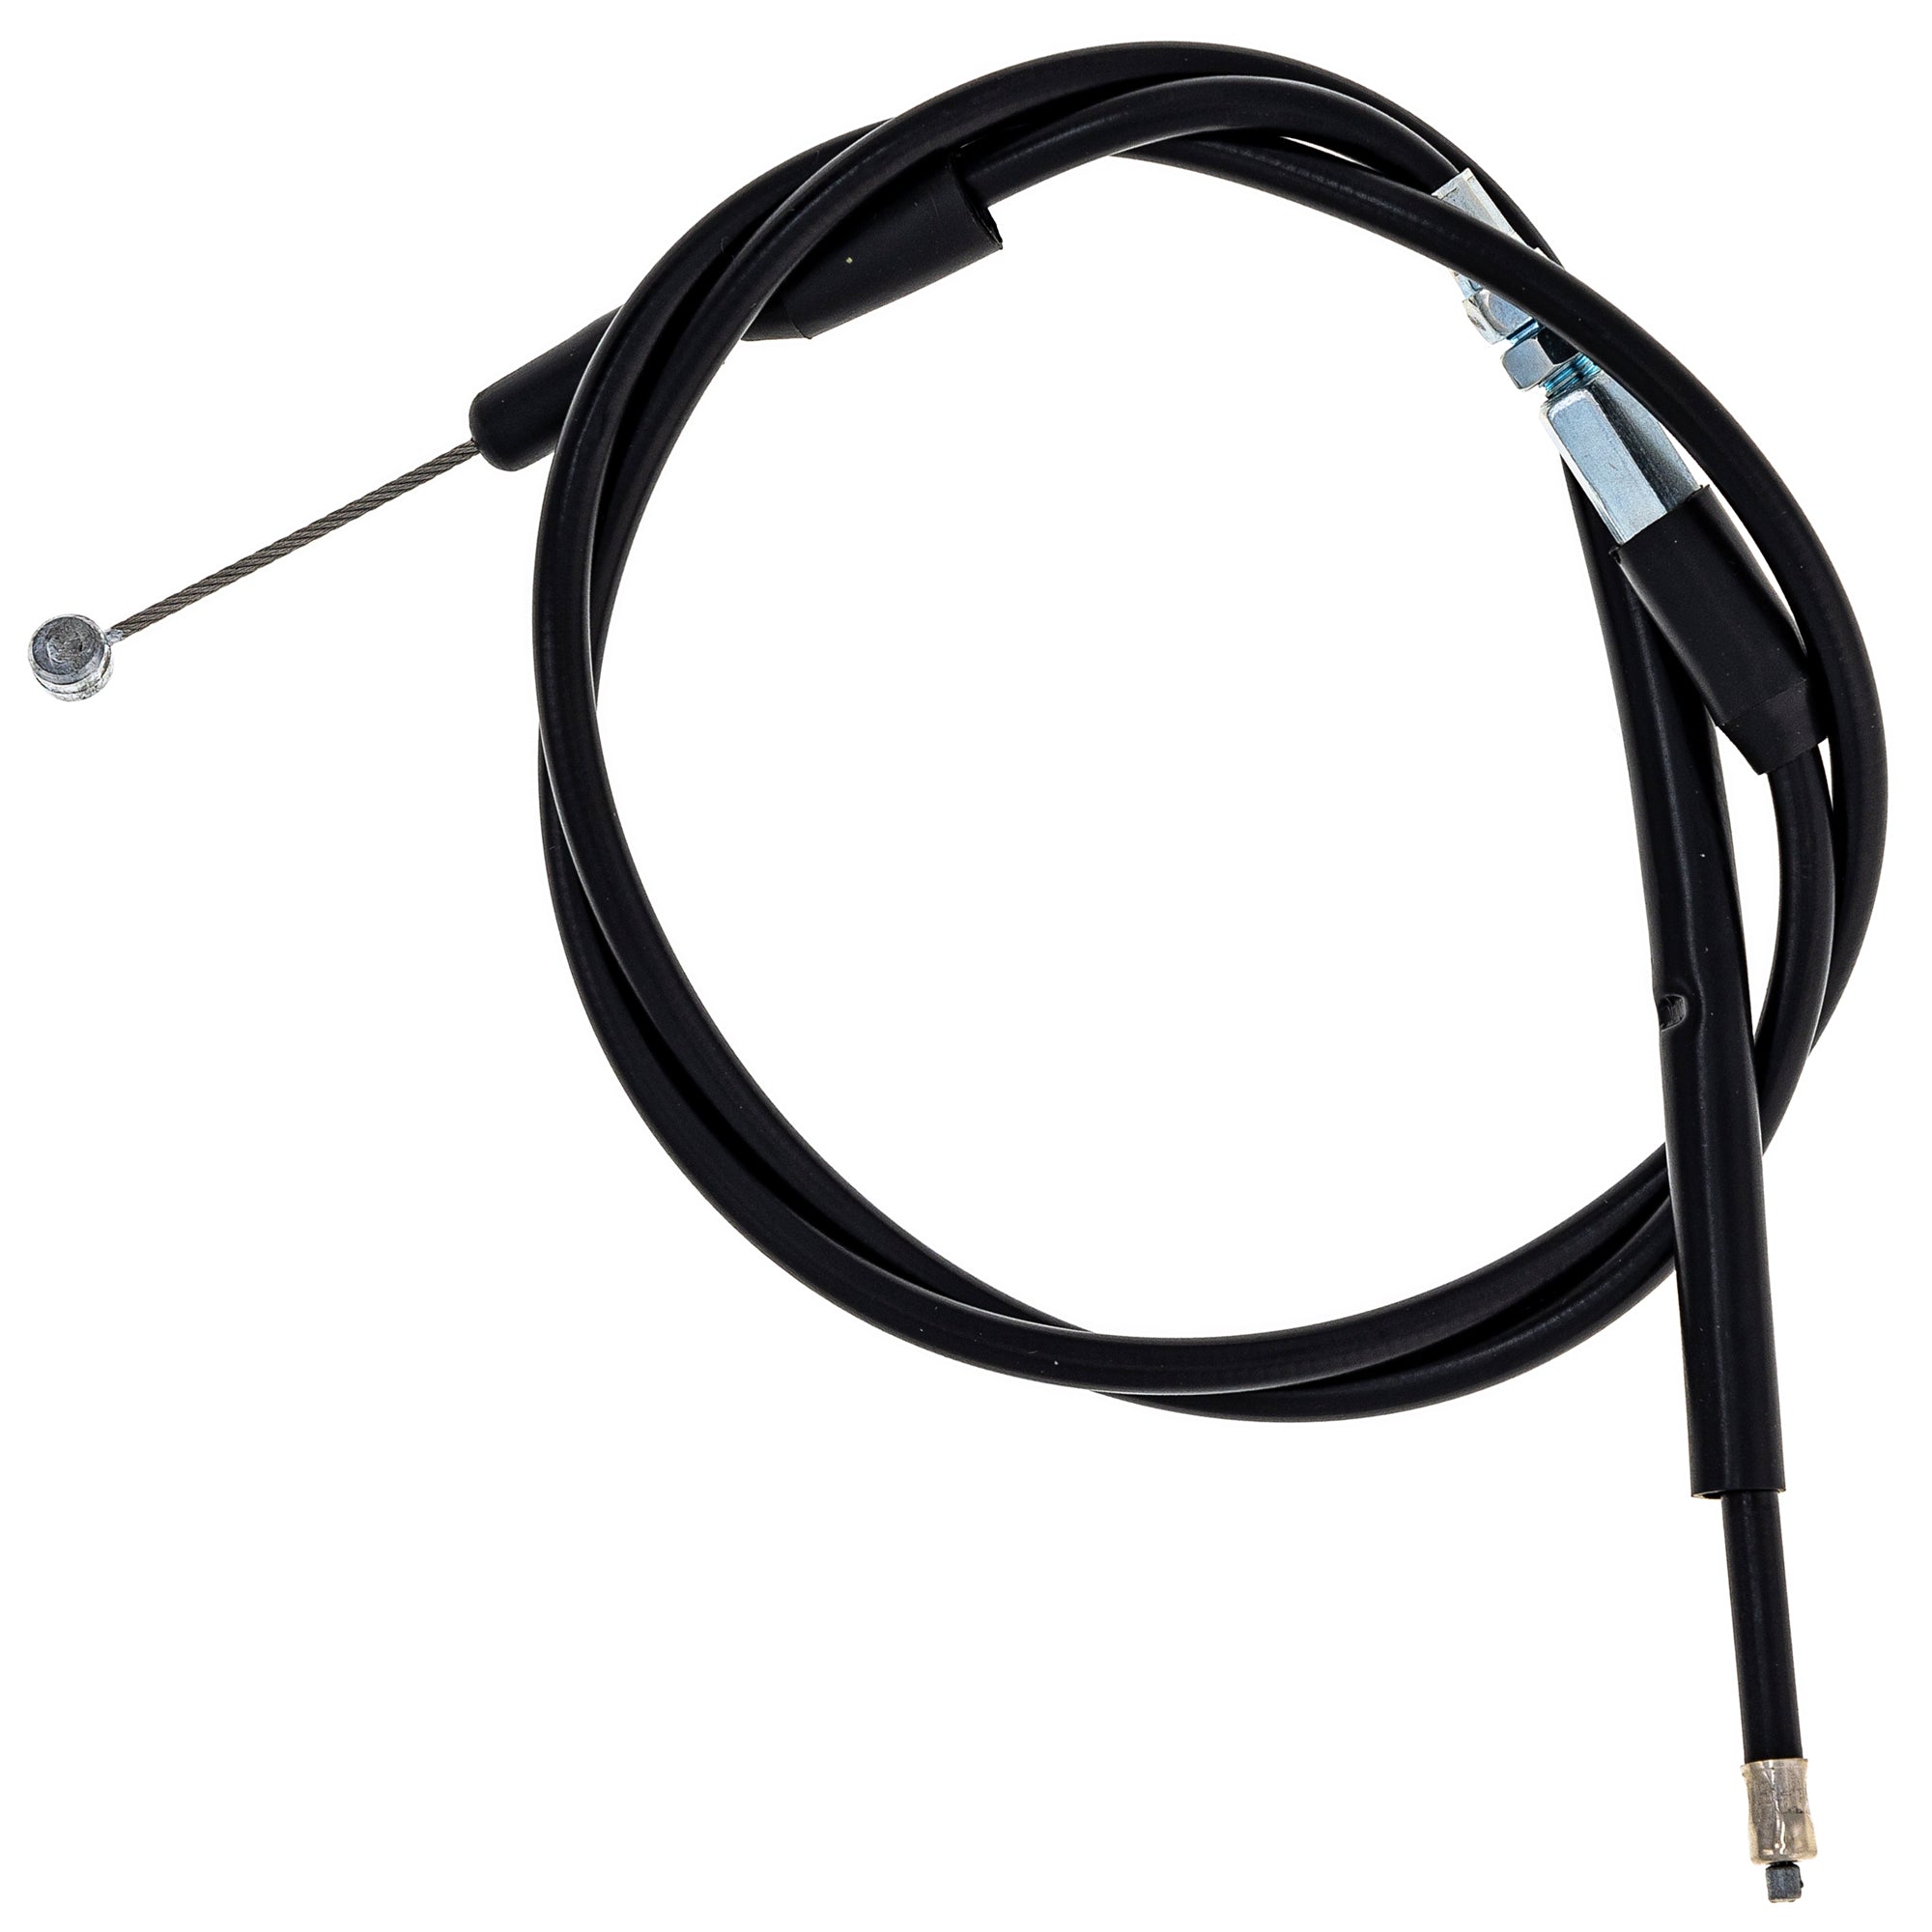 Hot Start Cable for zOTHER KX450F KX250F KLX450R NICHE 519-CCB2342L